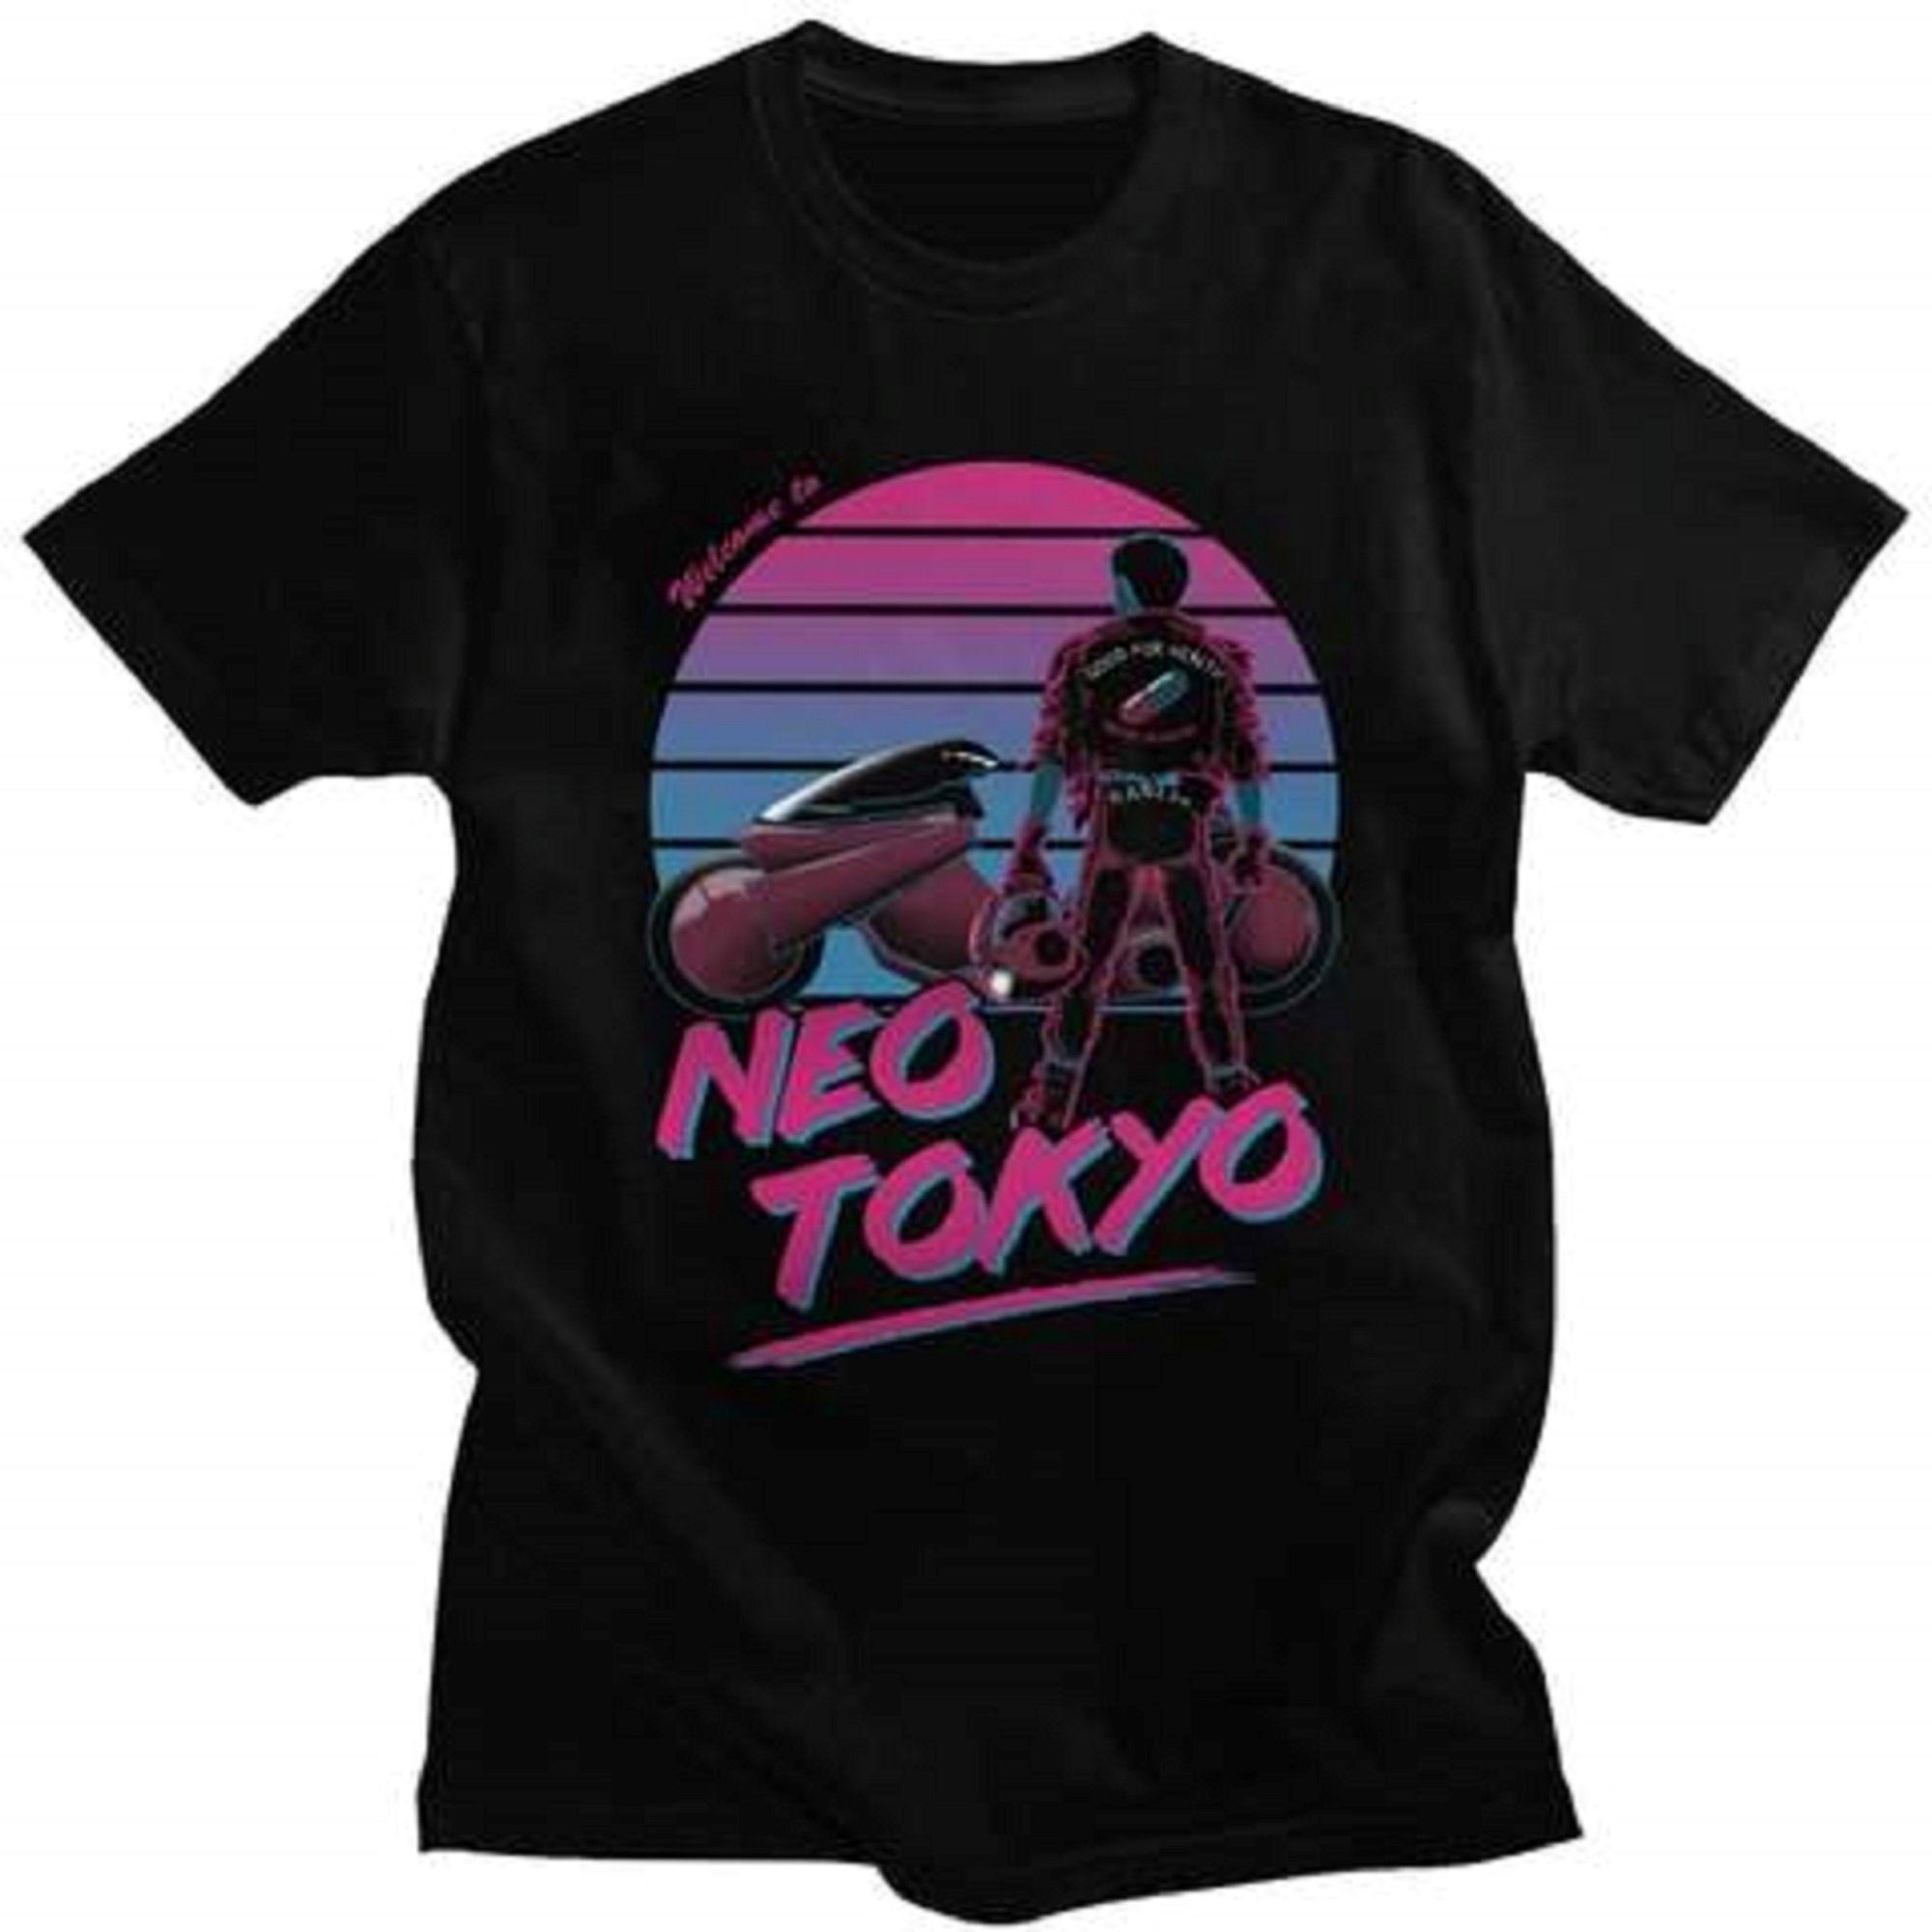 Akira Neo Tokyot-shirt Printed Art Shirt Gift For Men Women Unisex T Shirt